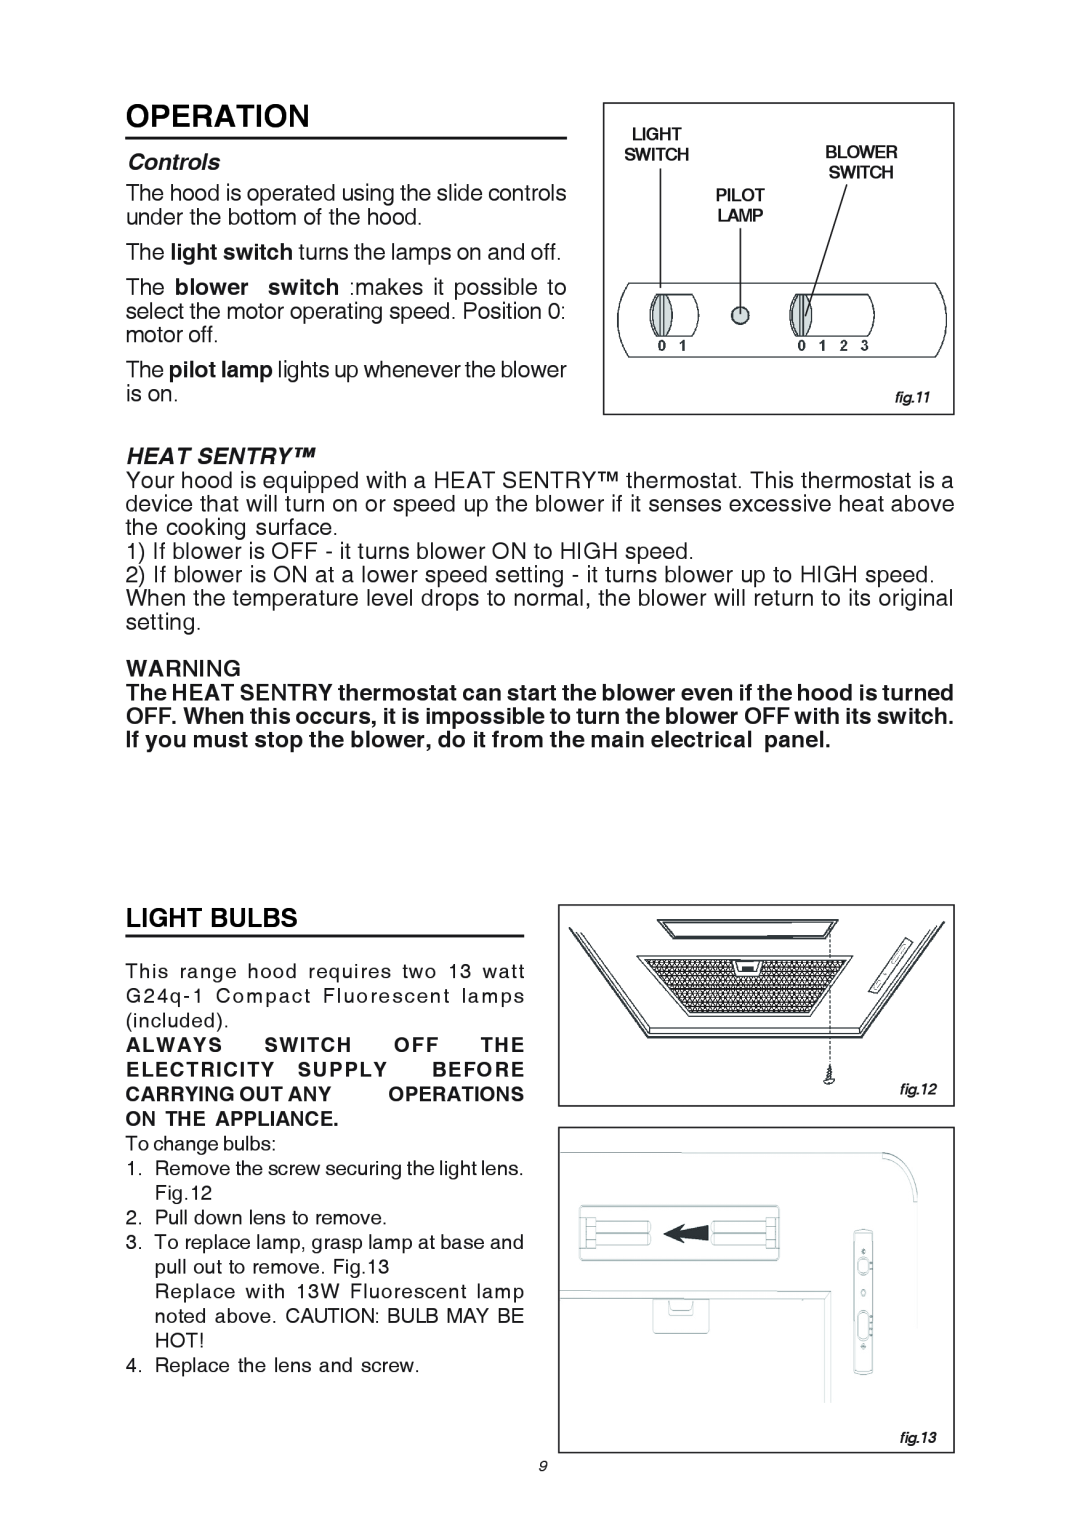 Broan RME50000 manual Operation, Light Bulbs, Controls, Heat Sentry 